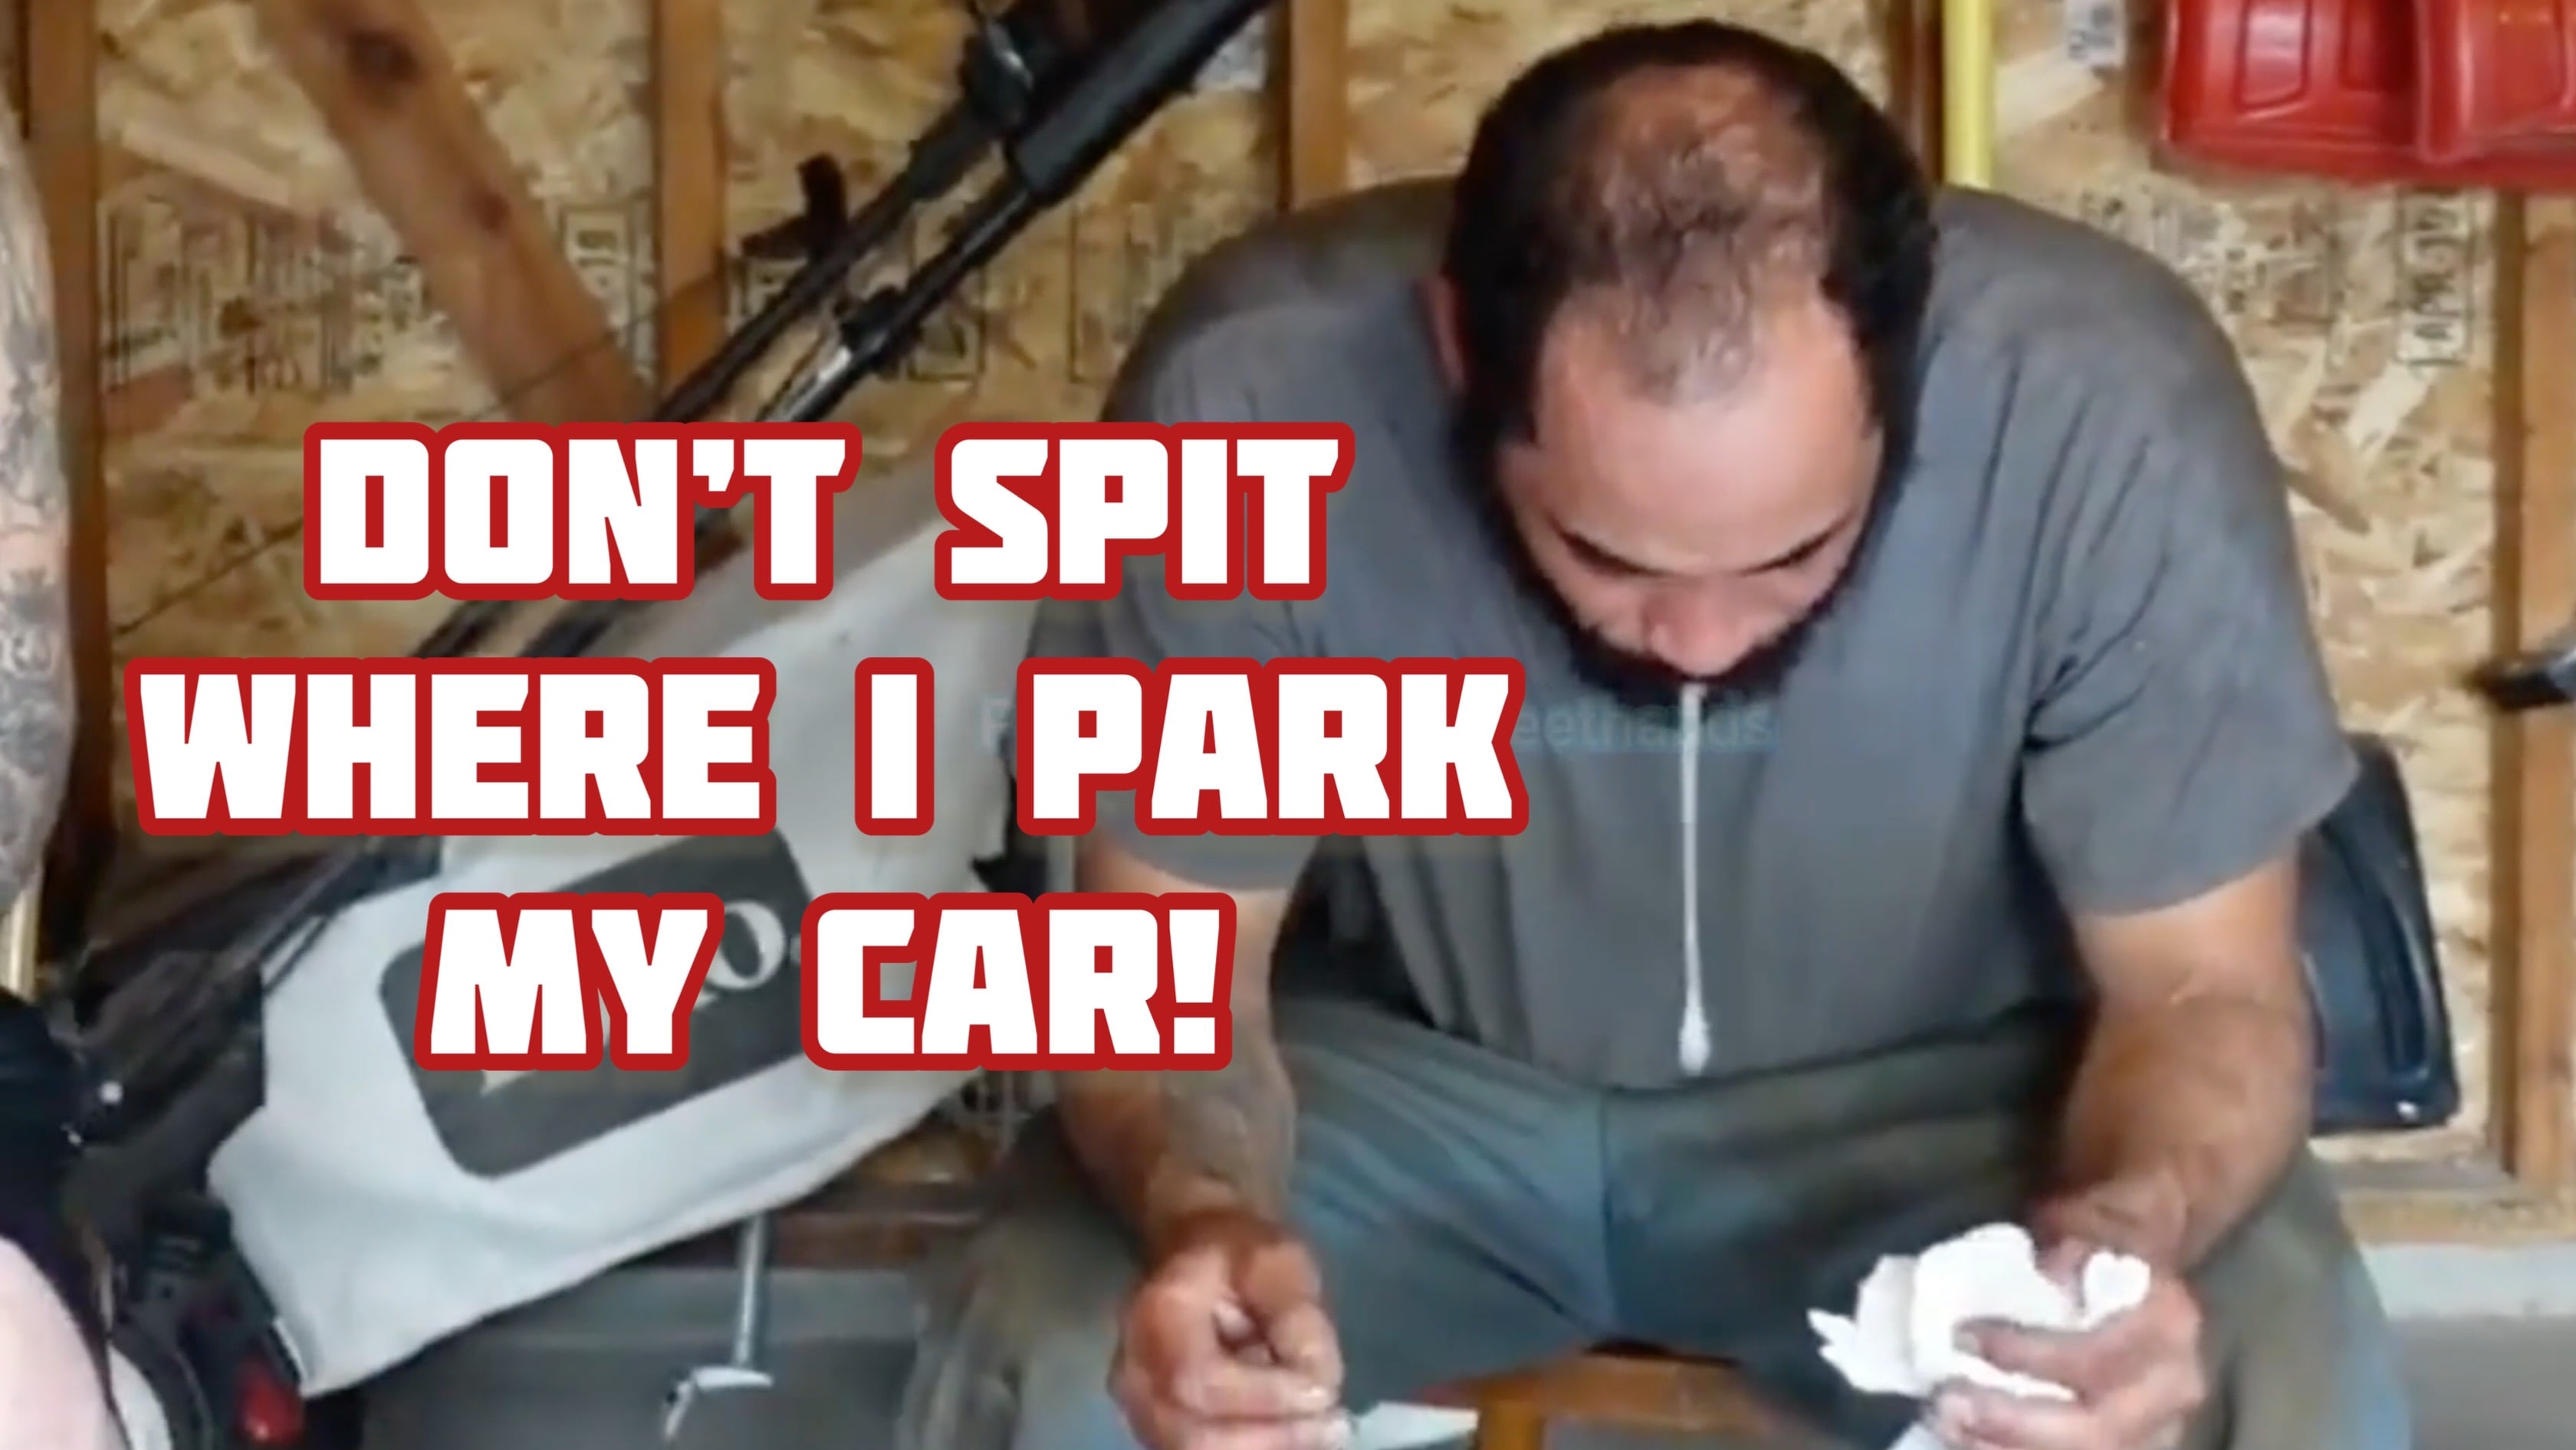 Don't Spit Where I Park My Car!